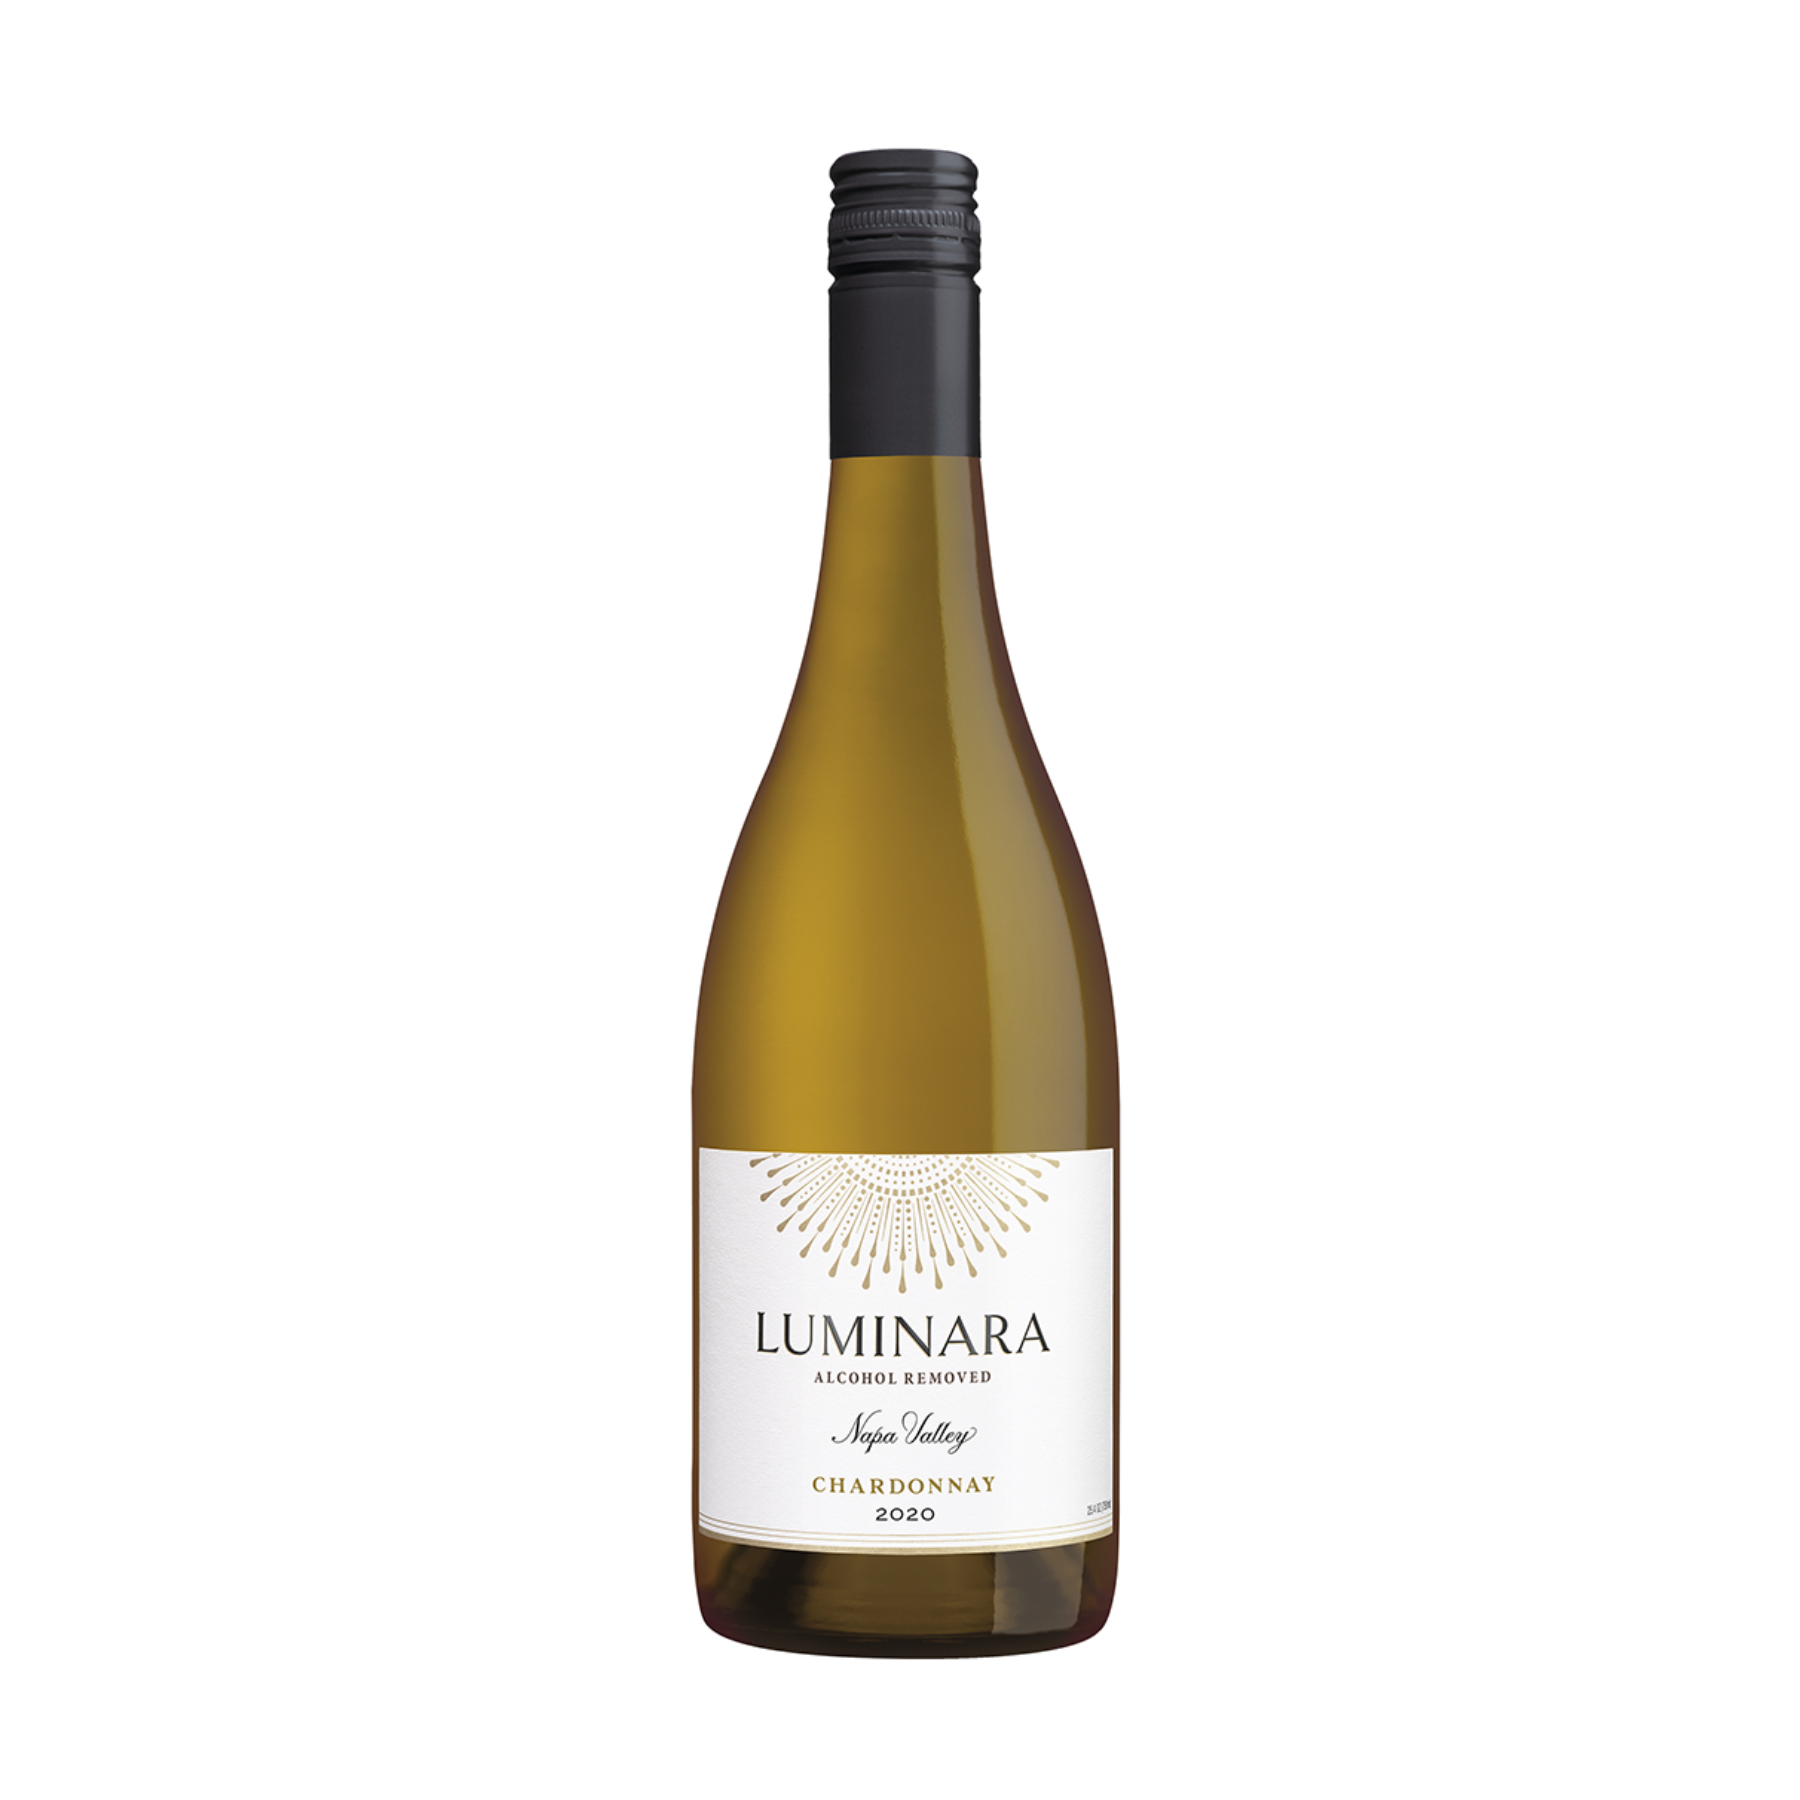 Luminara Chardonnay 2020 | Alcohol Removed Wine